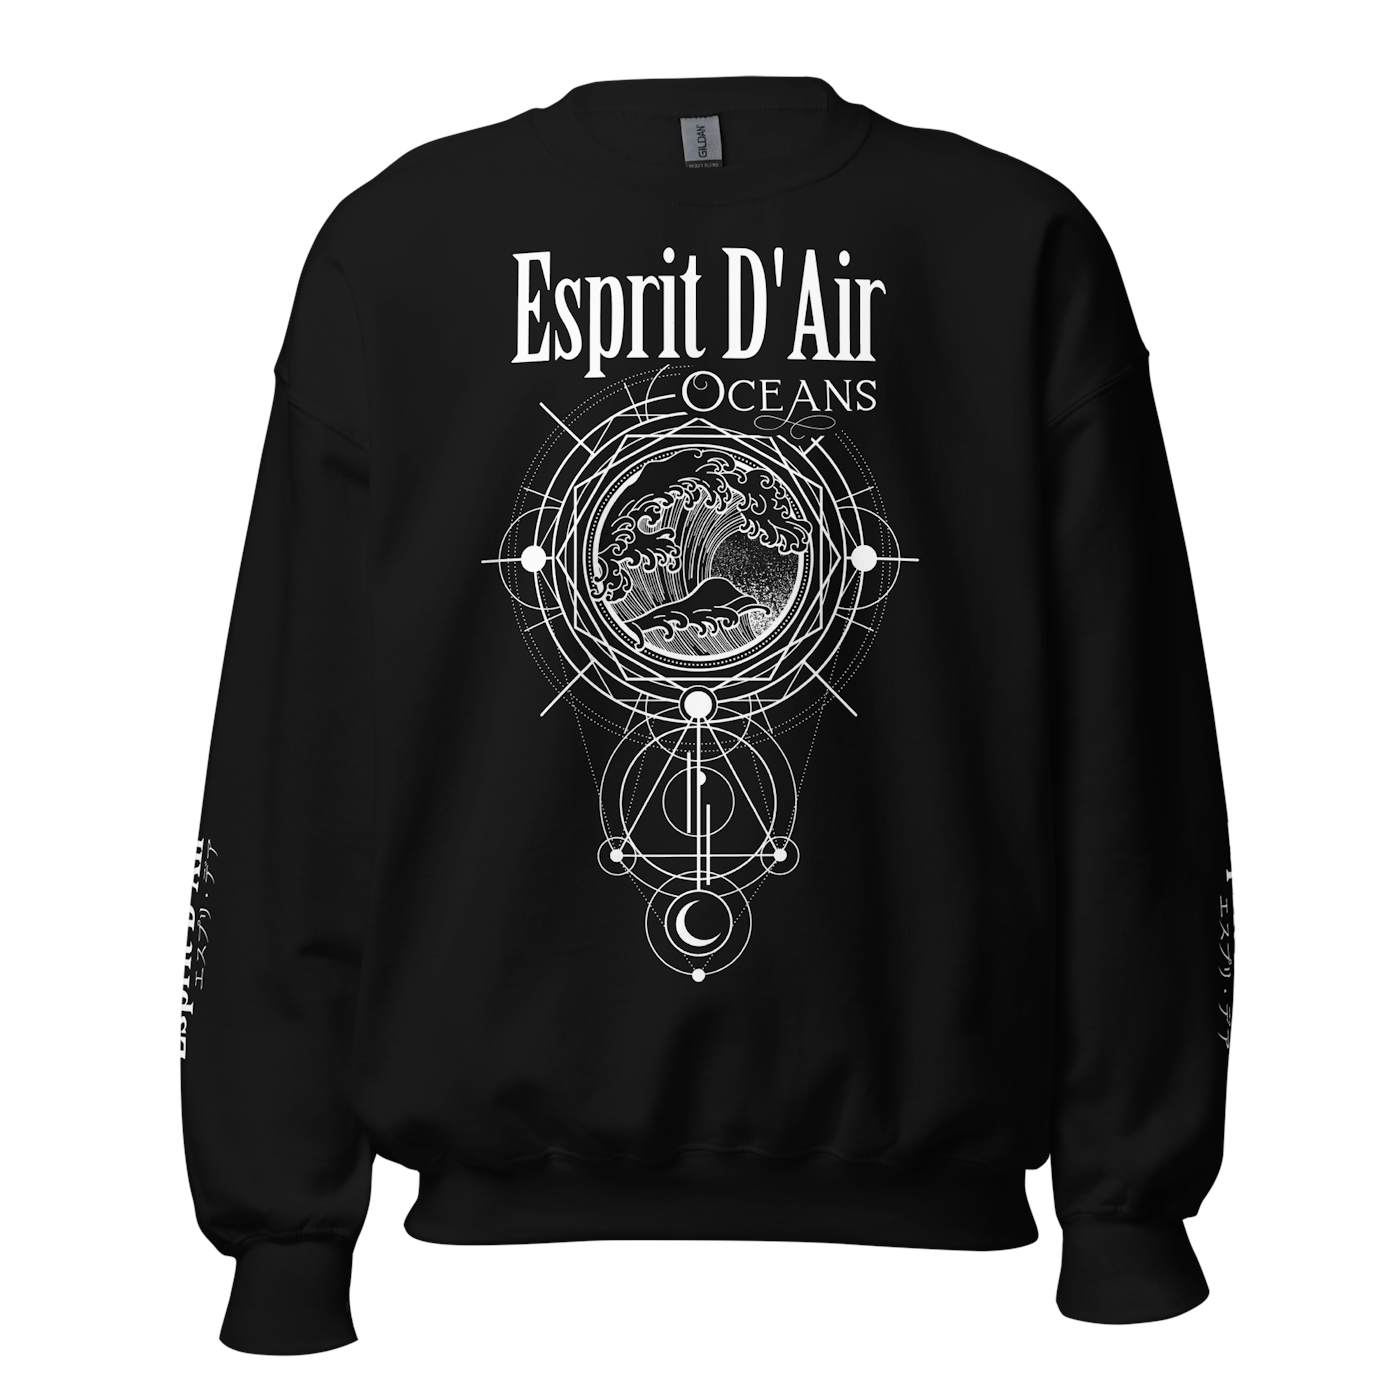 Esprit D'Air Oceans Sweatshirt